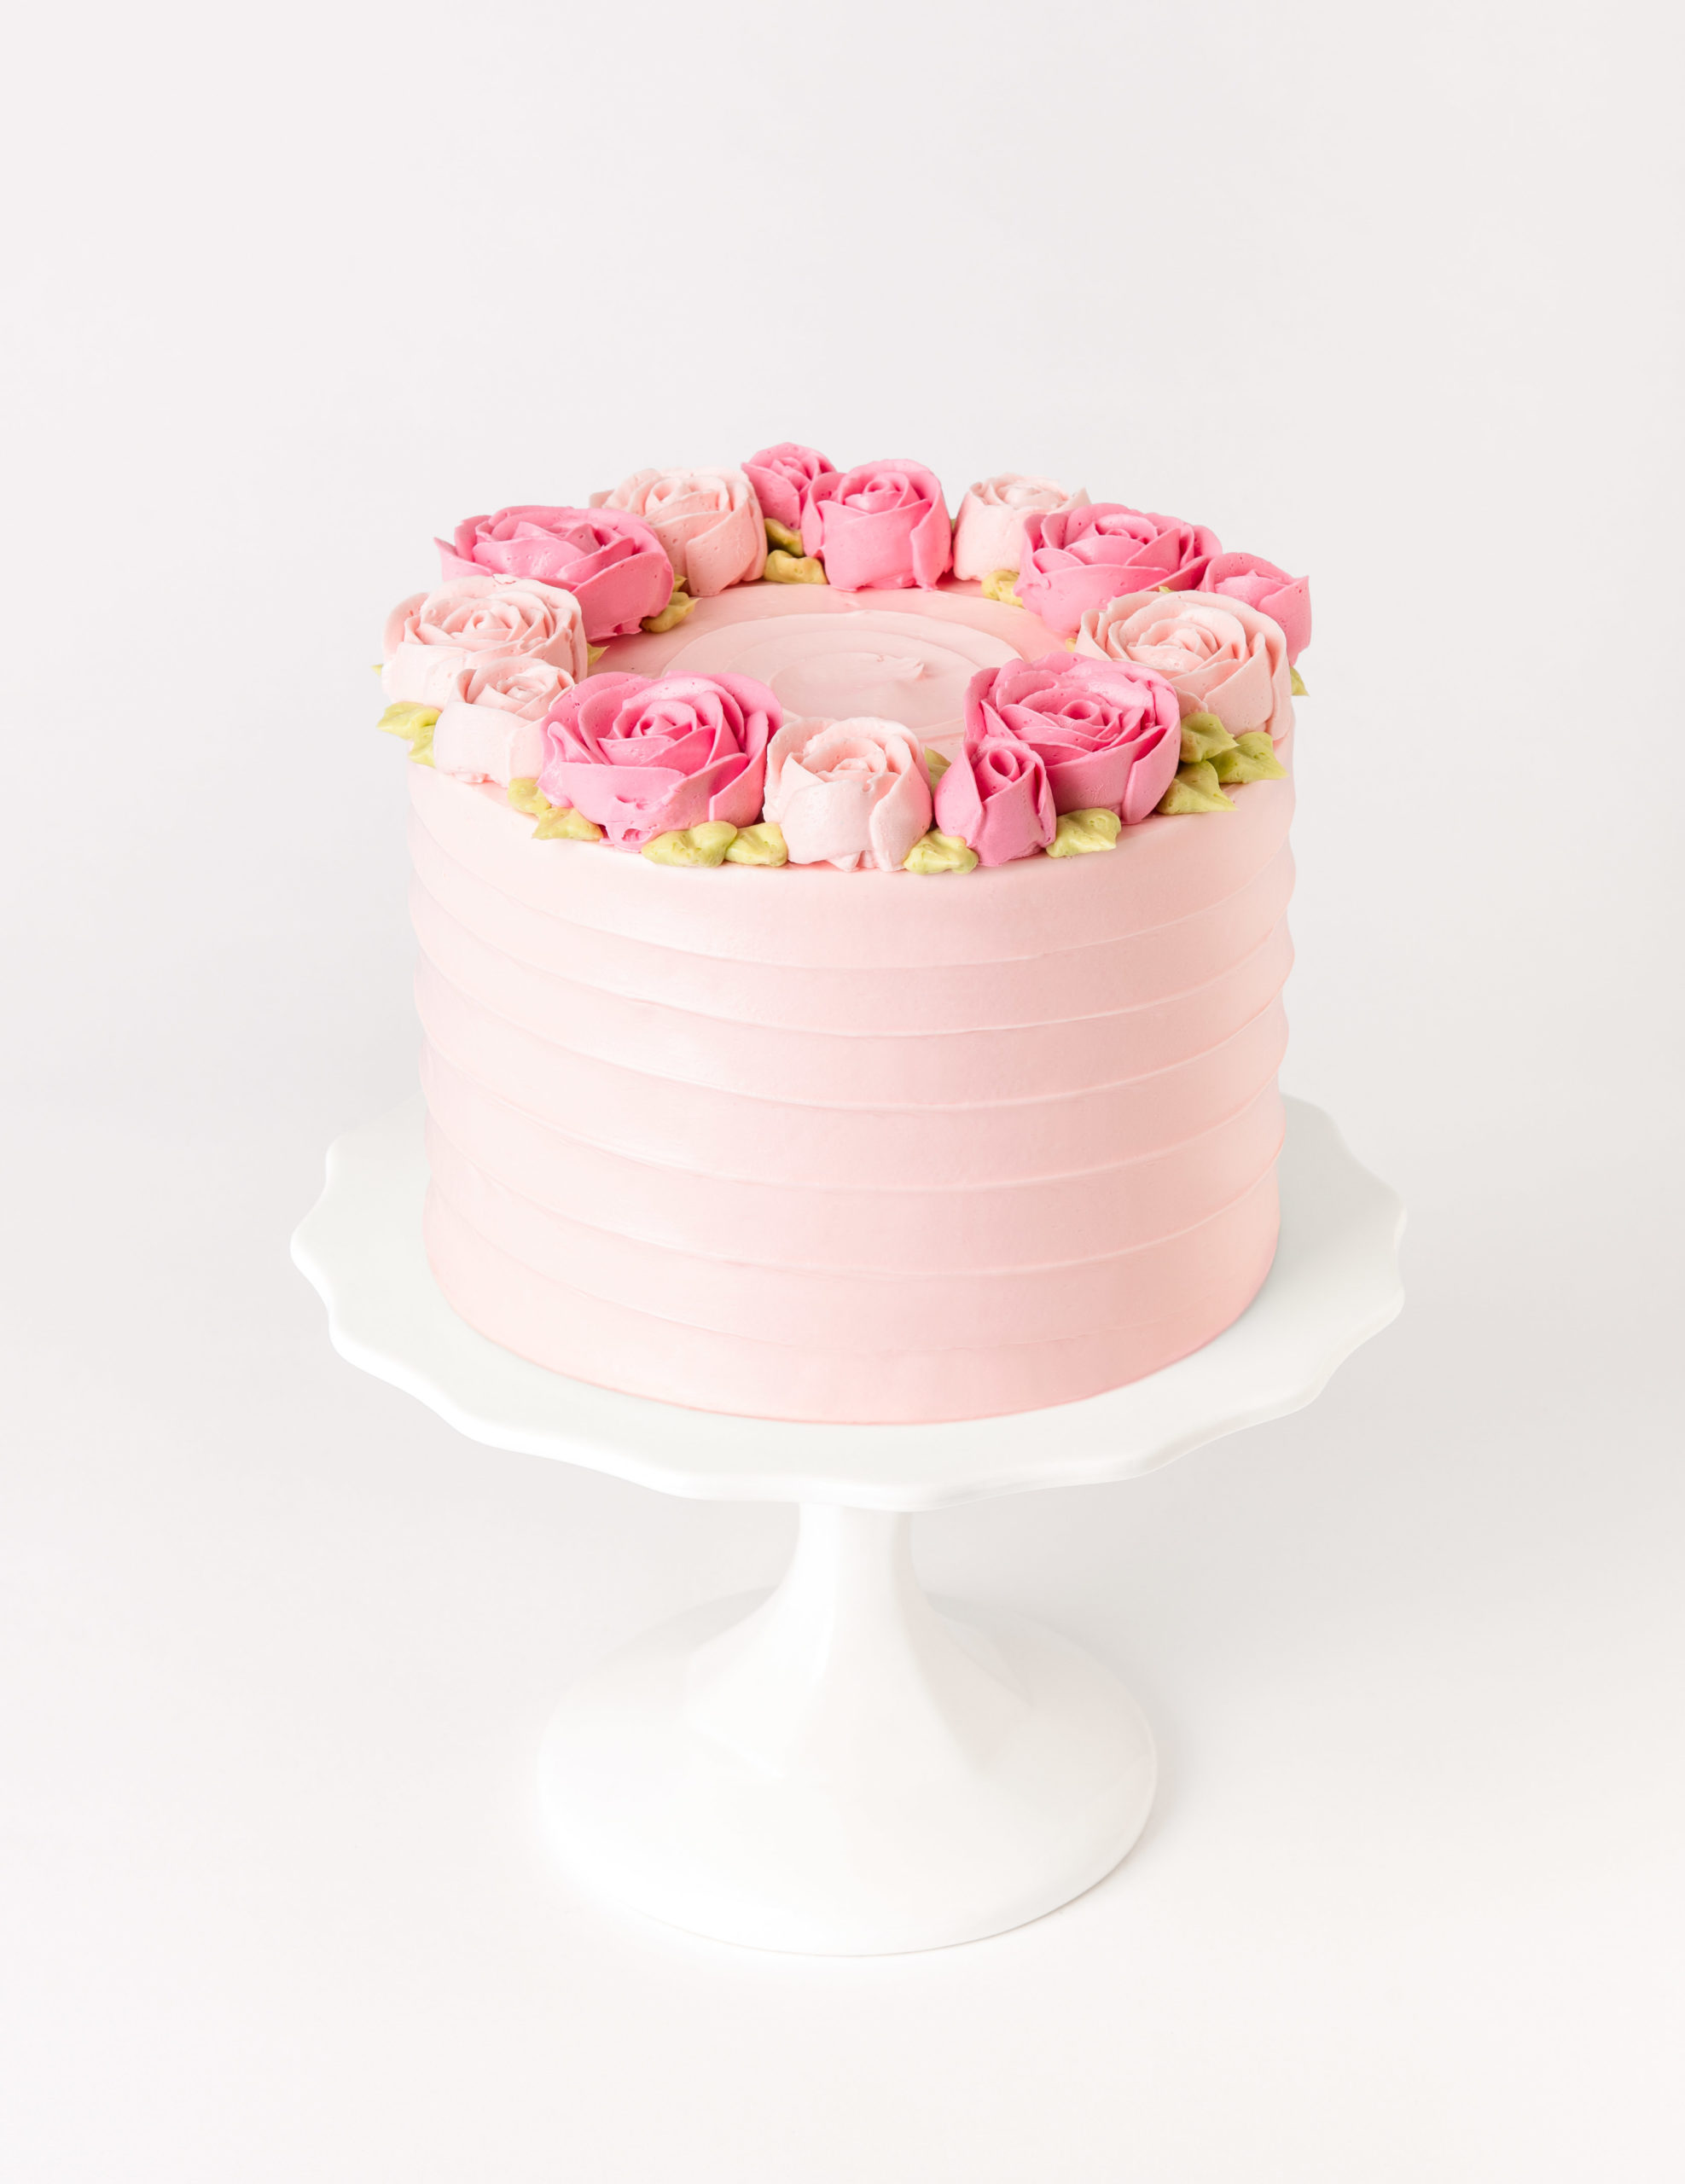 Rose and Daisy Cake | Rachelle's